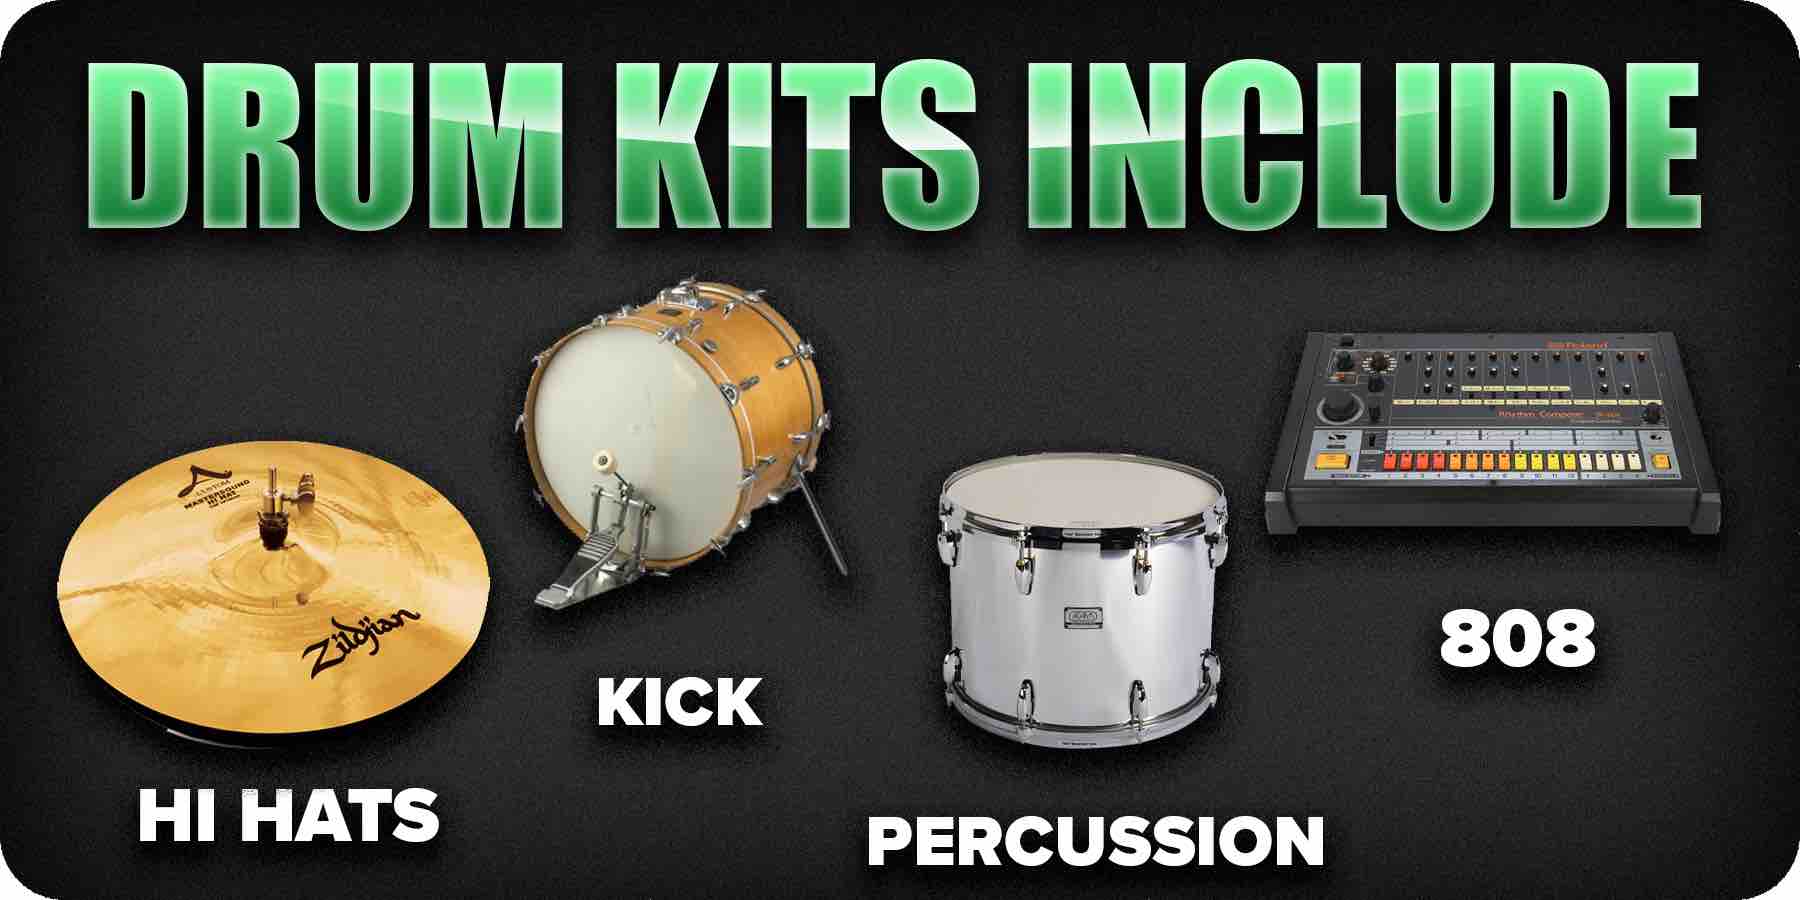 kanye west drum kit